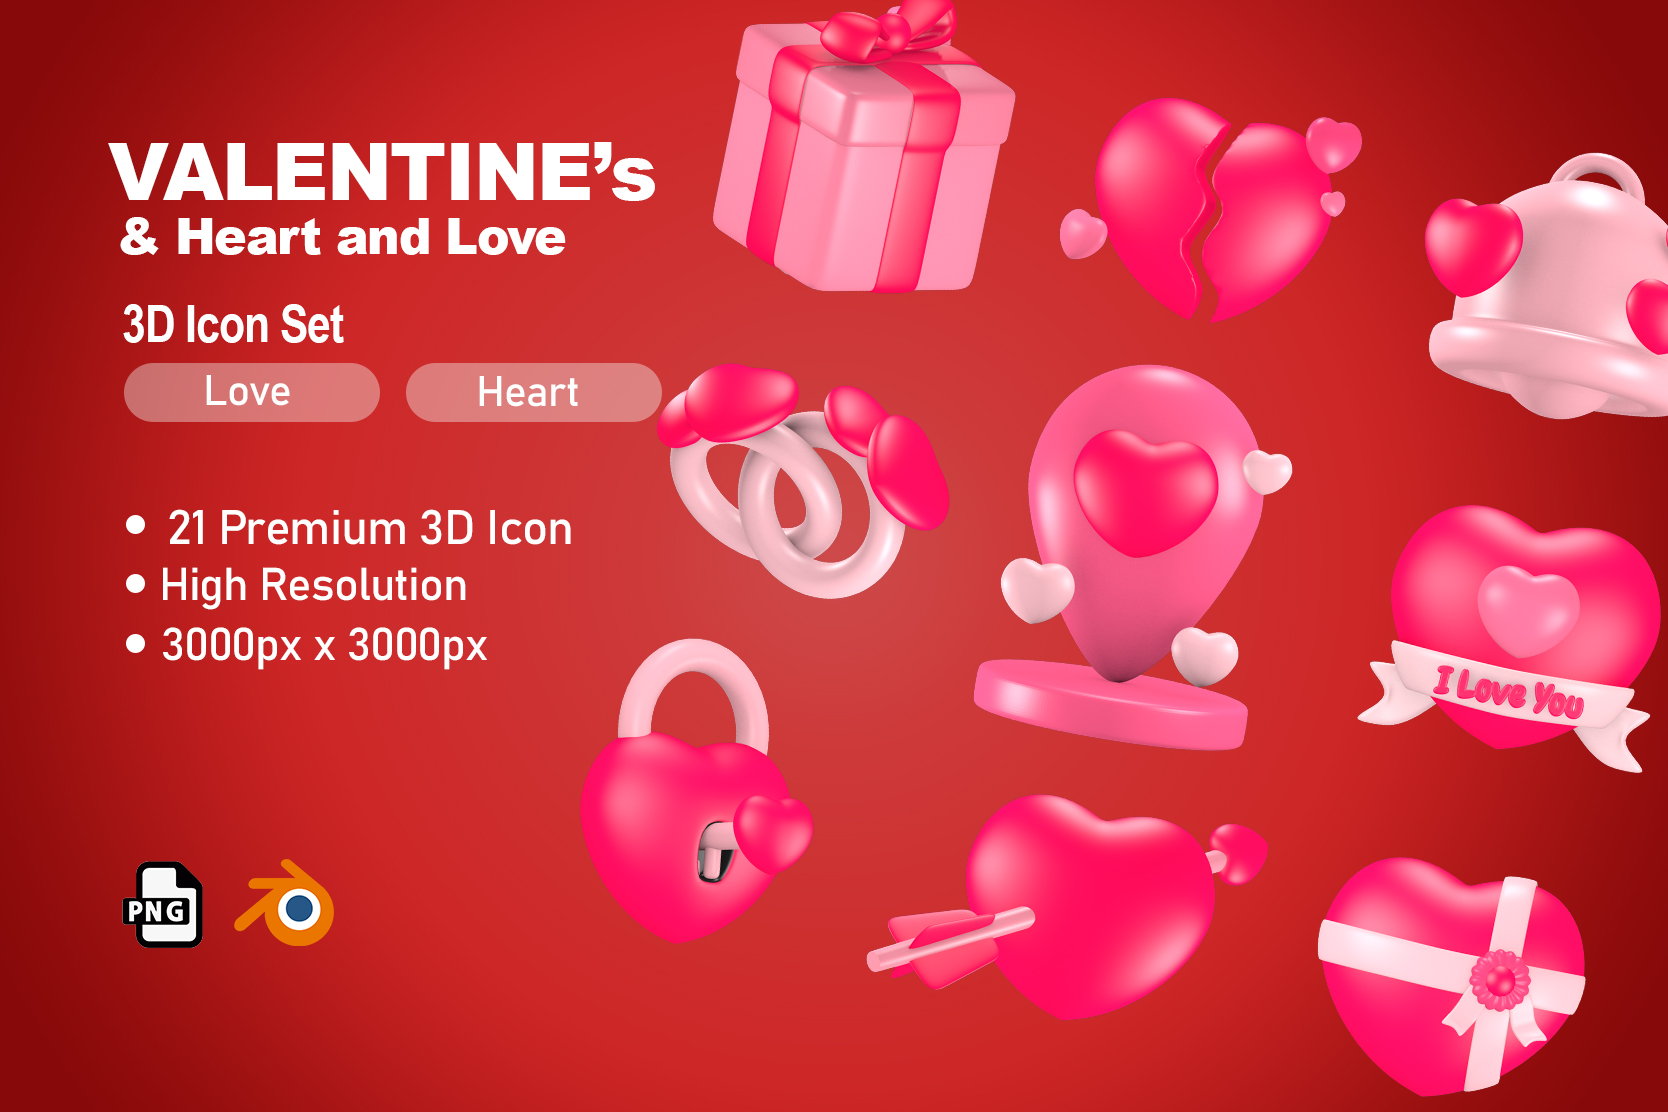 Premium Valentine's Day 3D Illustration pack from Festival & Days 3D  Illustrations